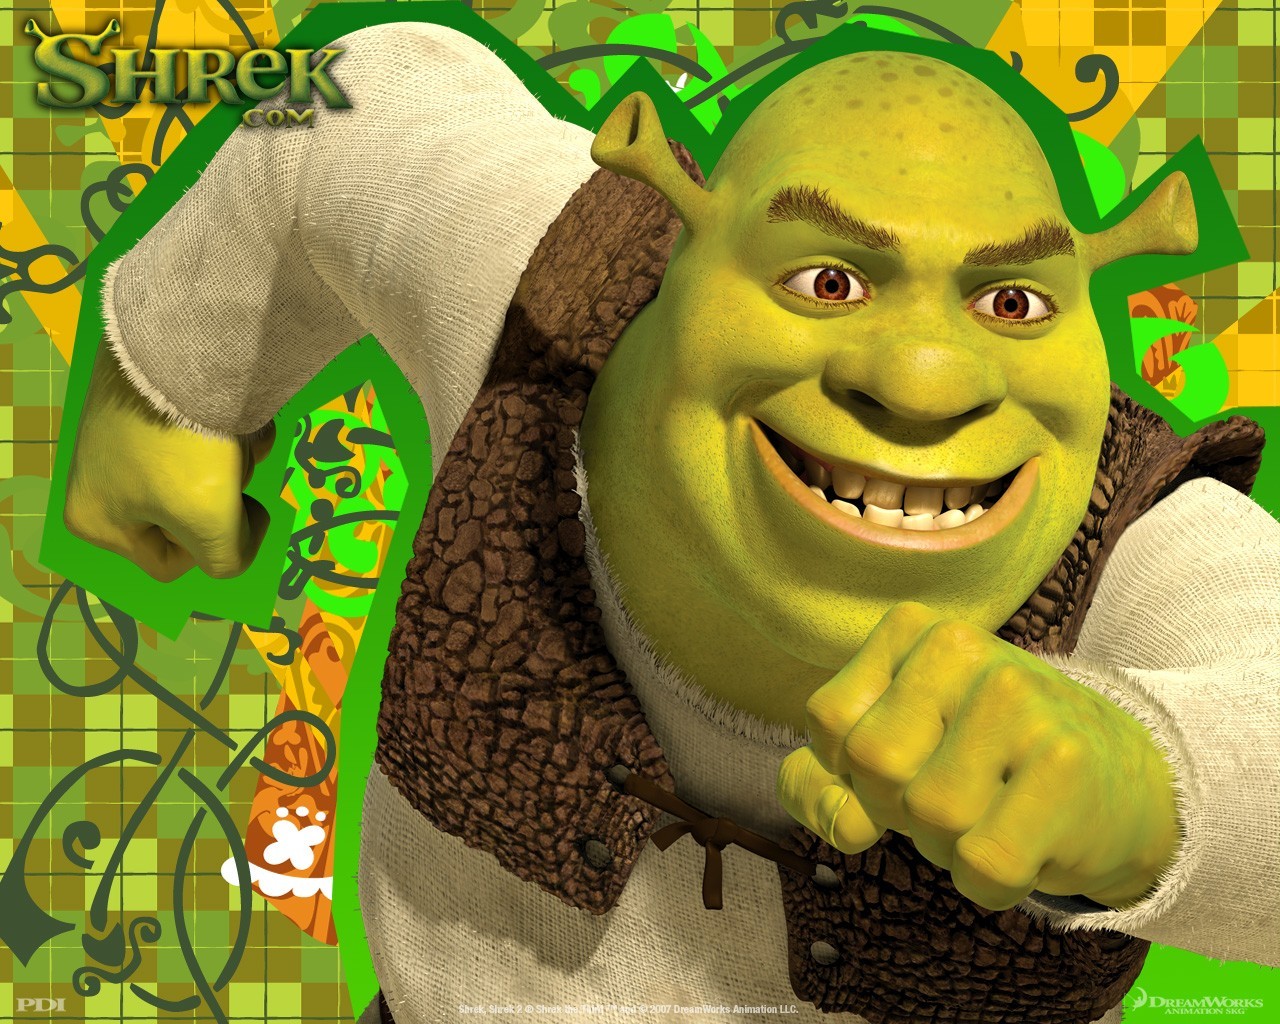    Shrek 2: The Game